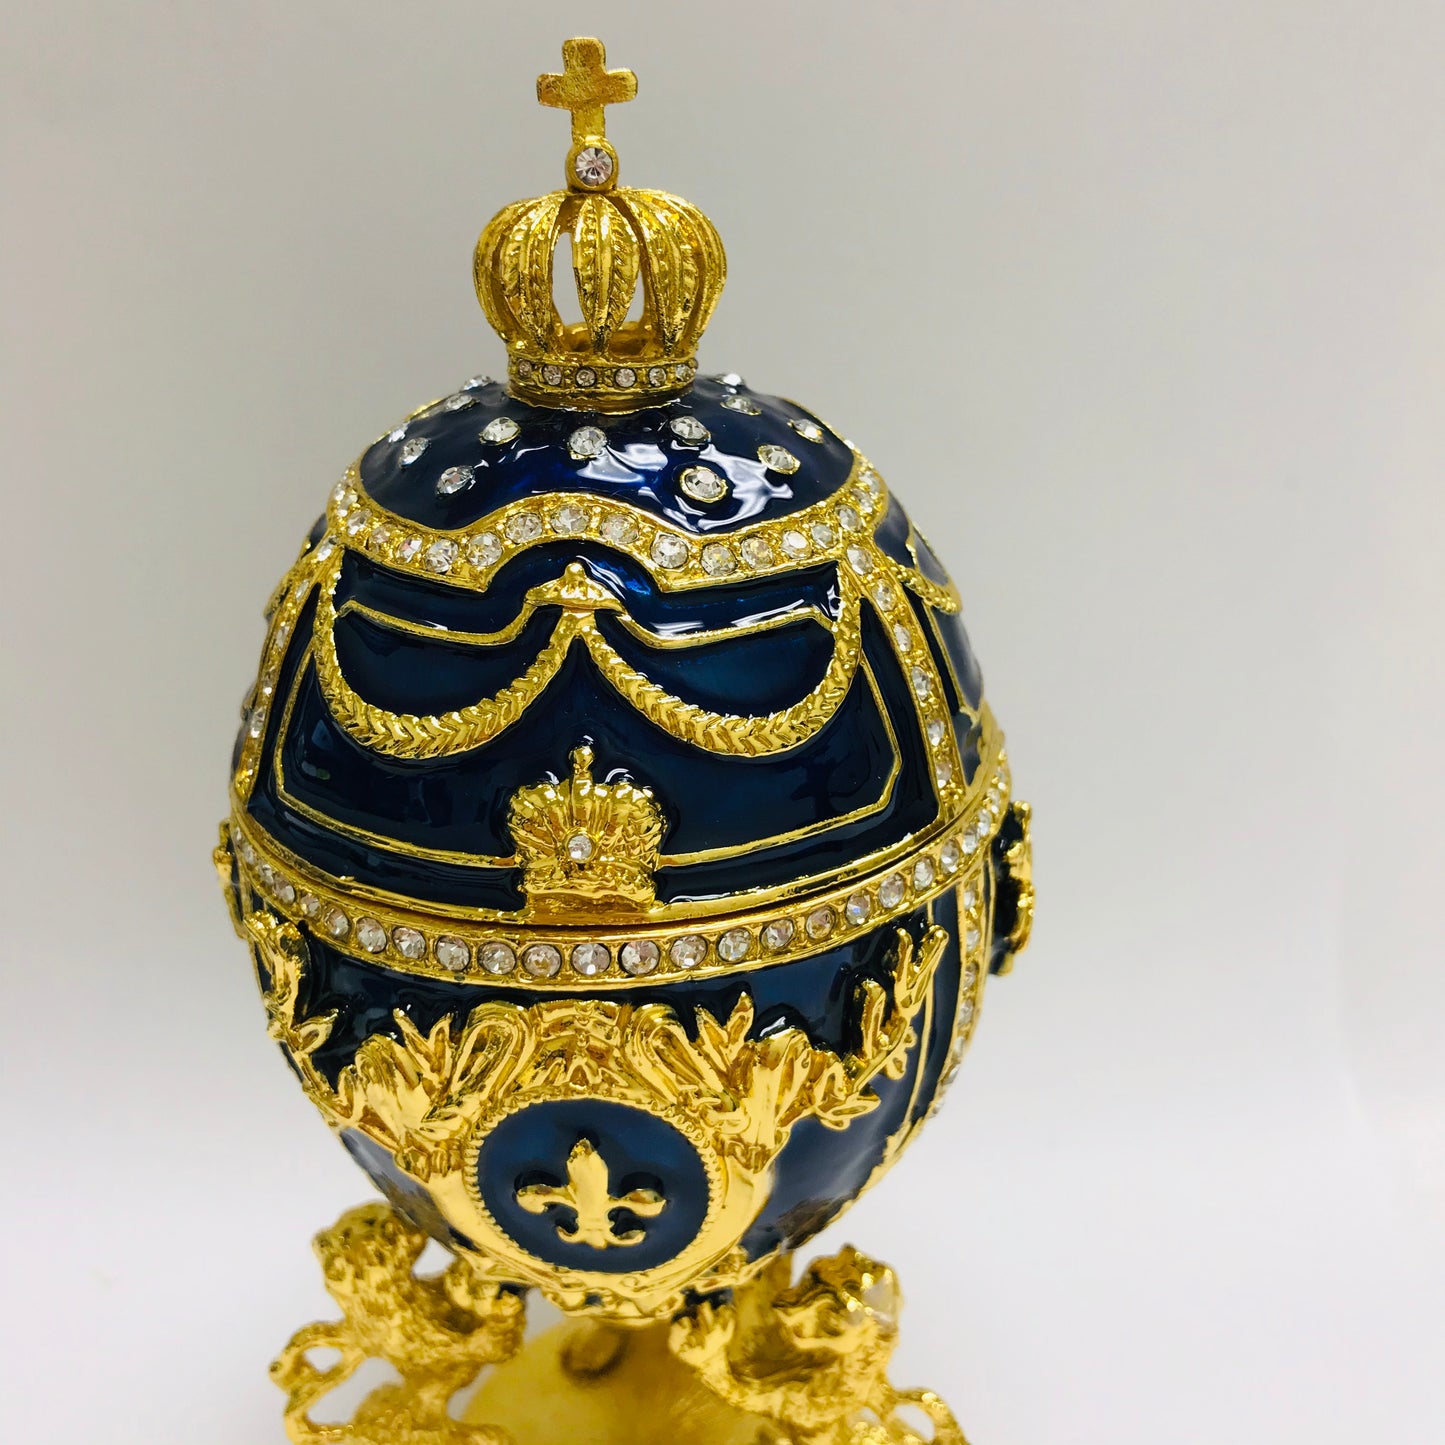 Cristiani Collezione Large Blue Gold Lion Musical Egg Trinket Box.